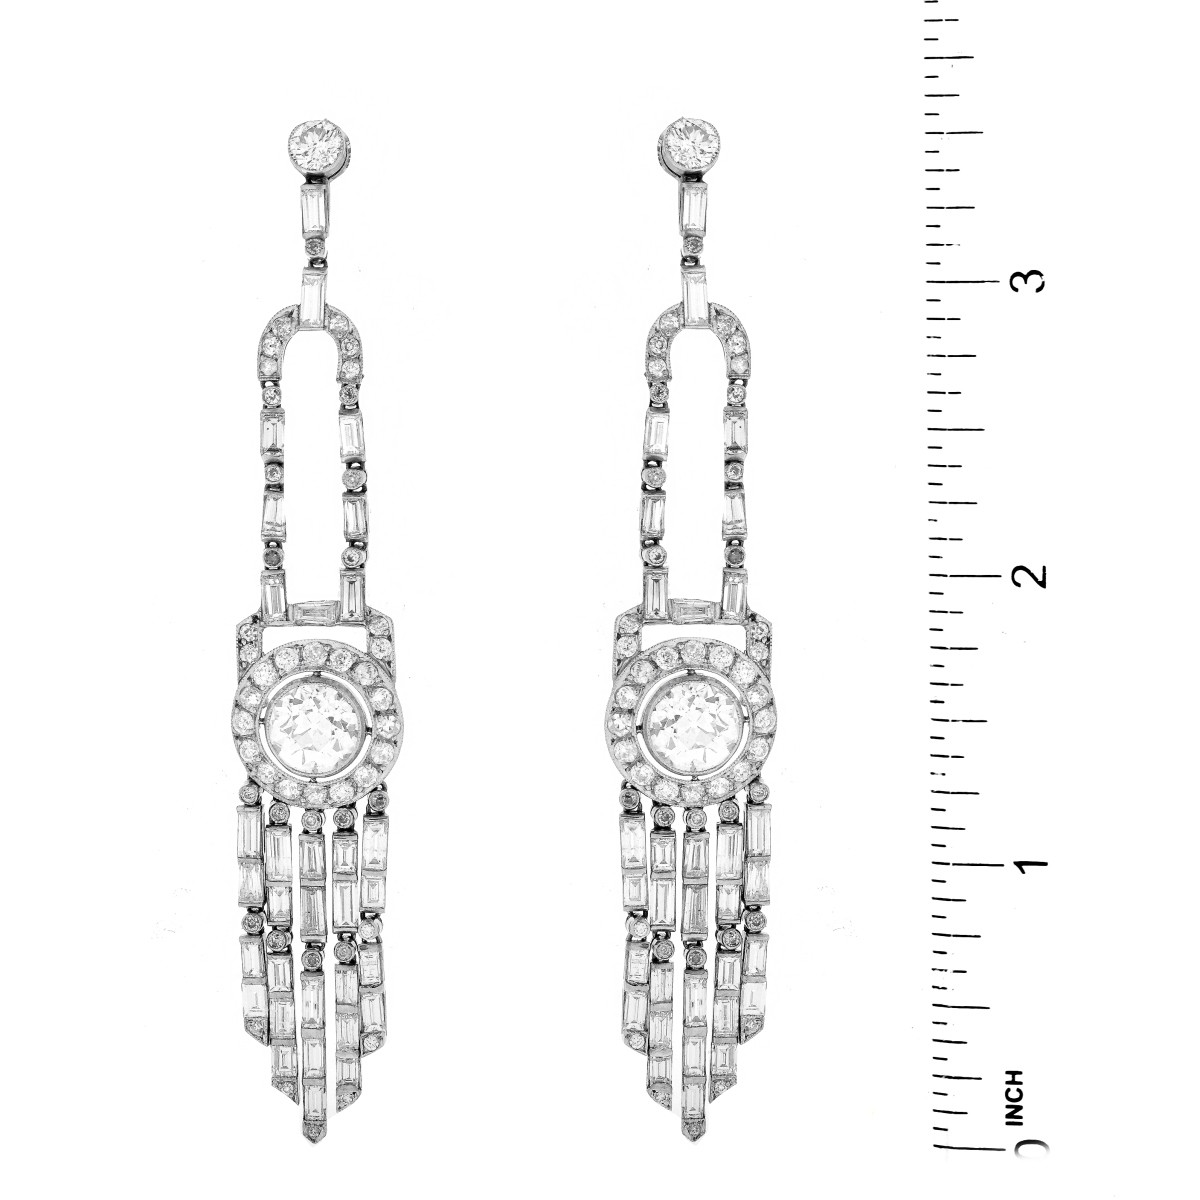 13.0ct TW Diamond and Platinum Earrings